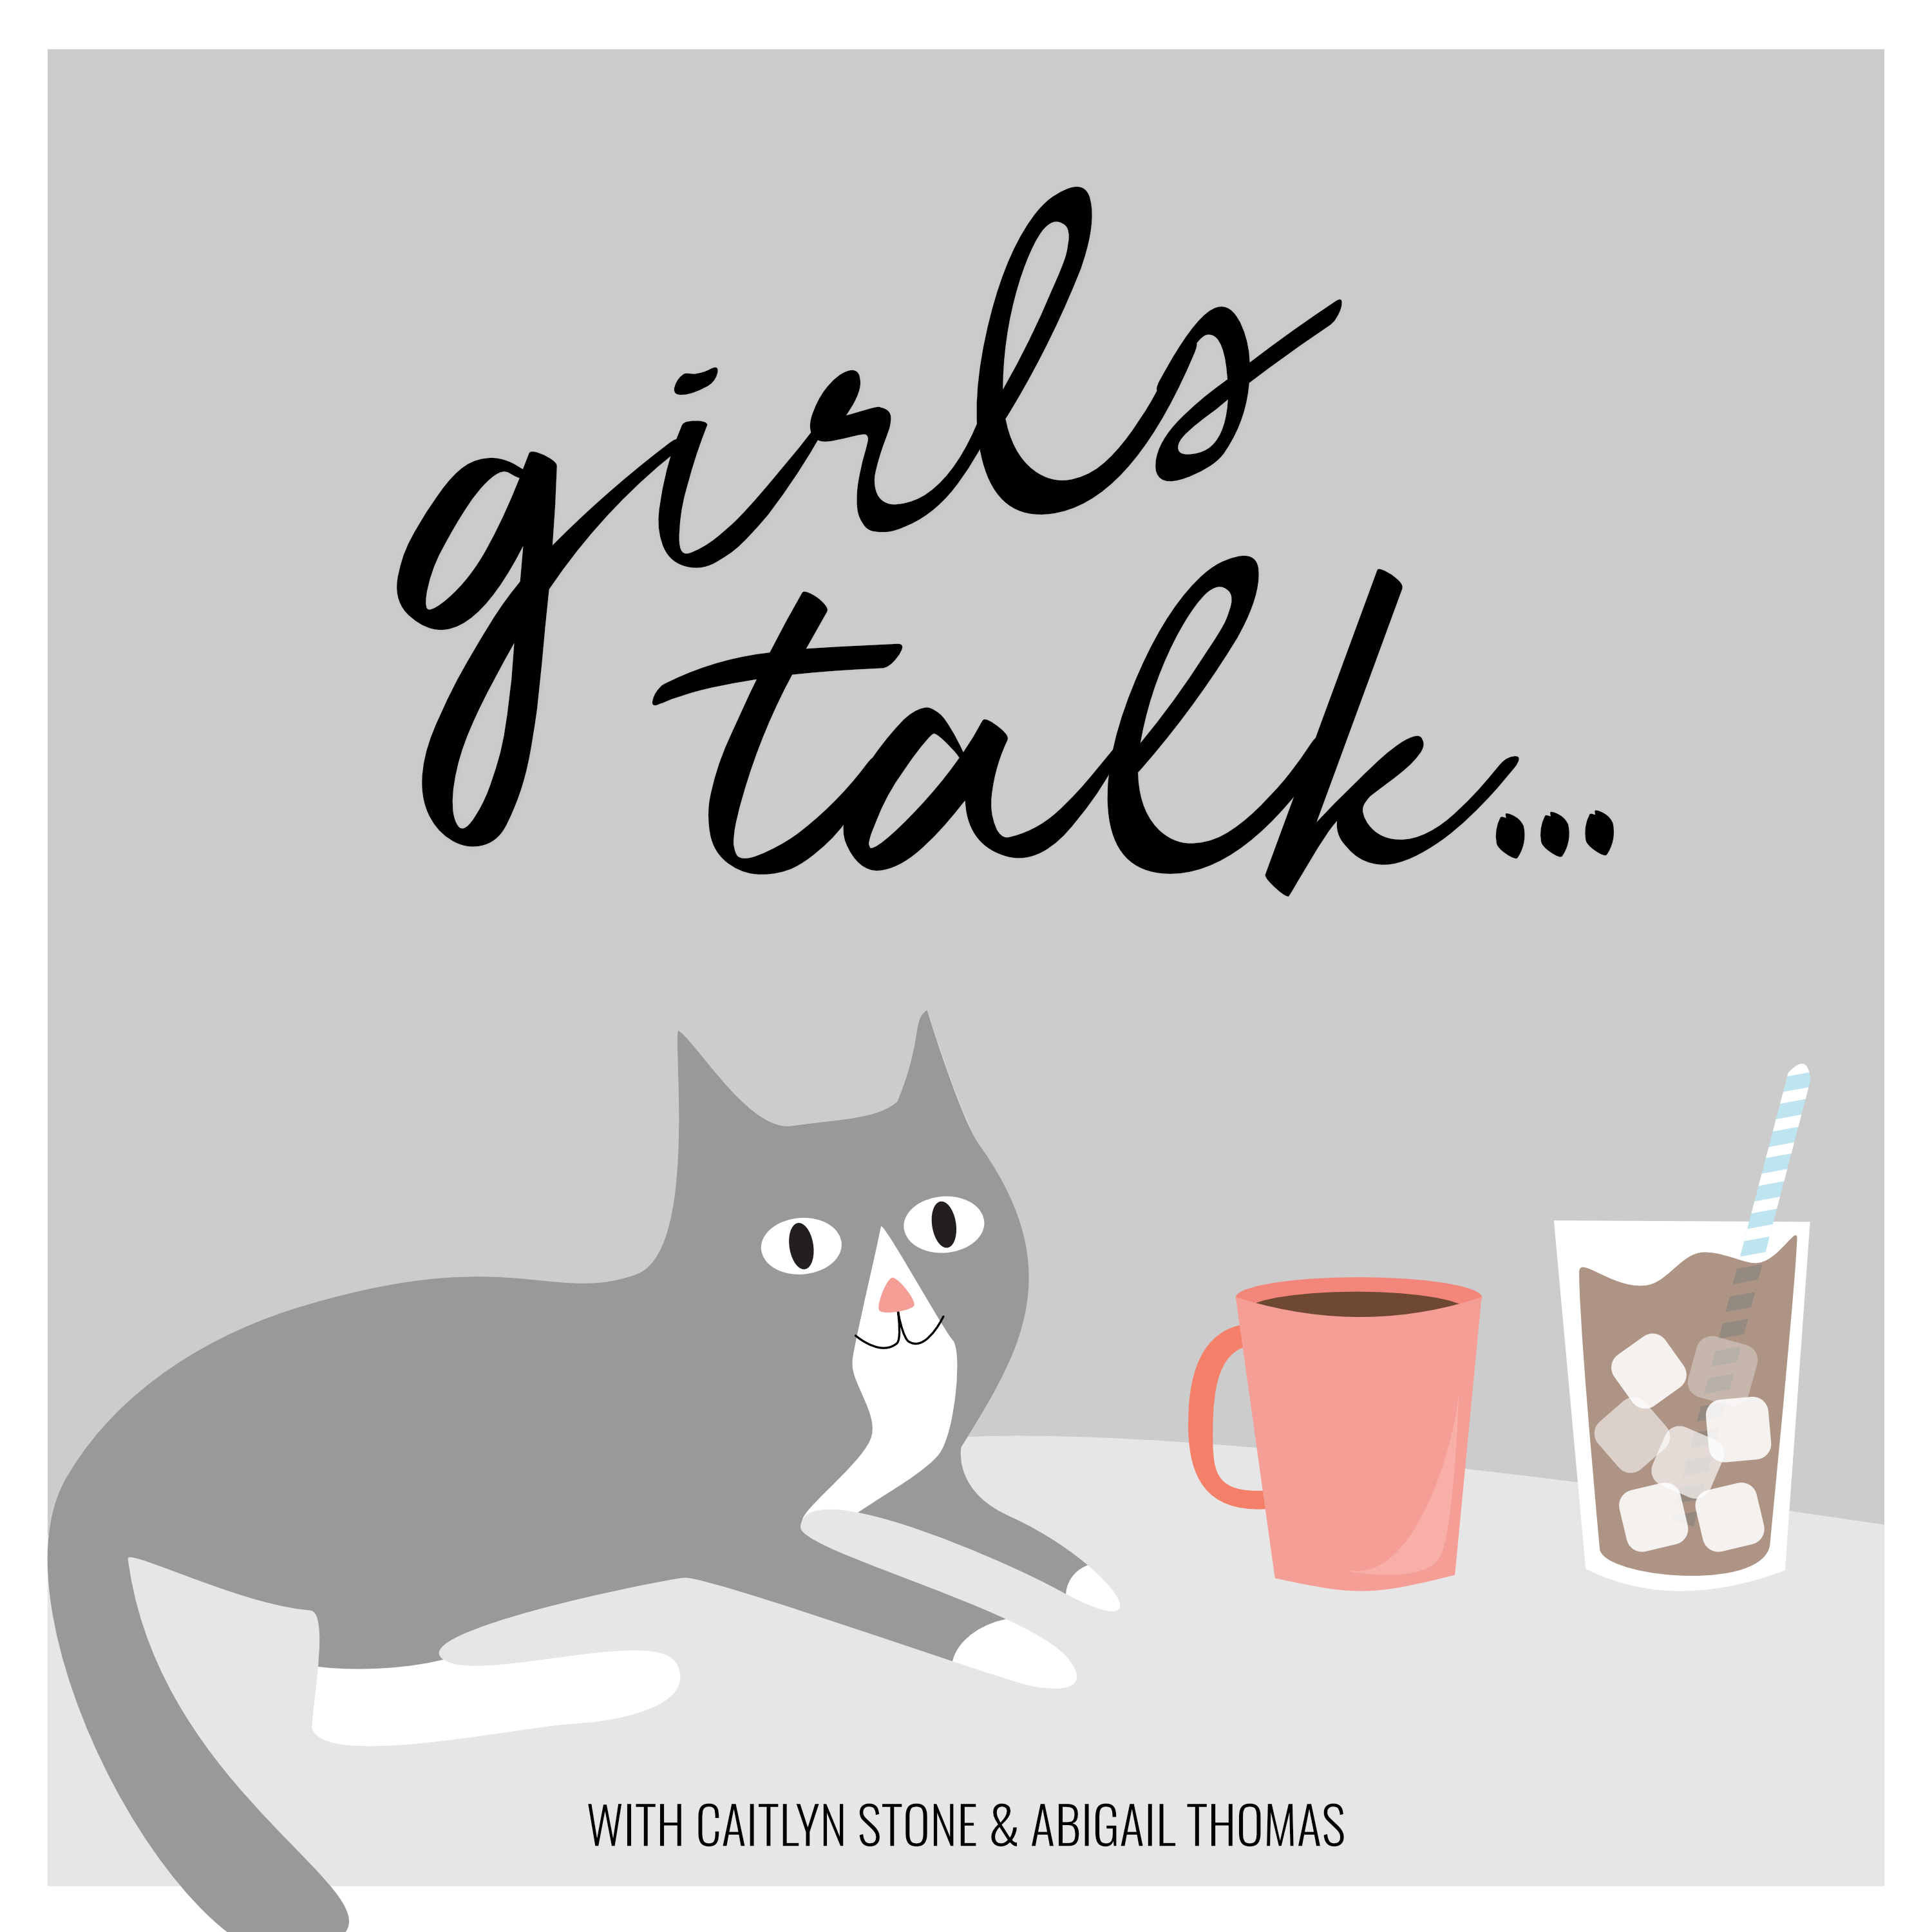 Girls Talk Podcast